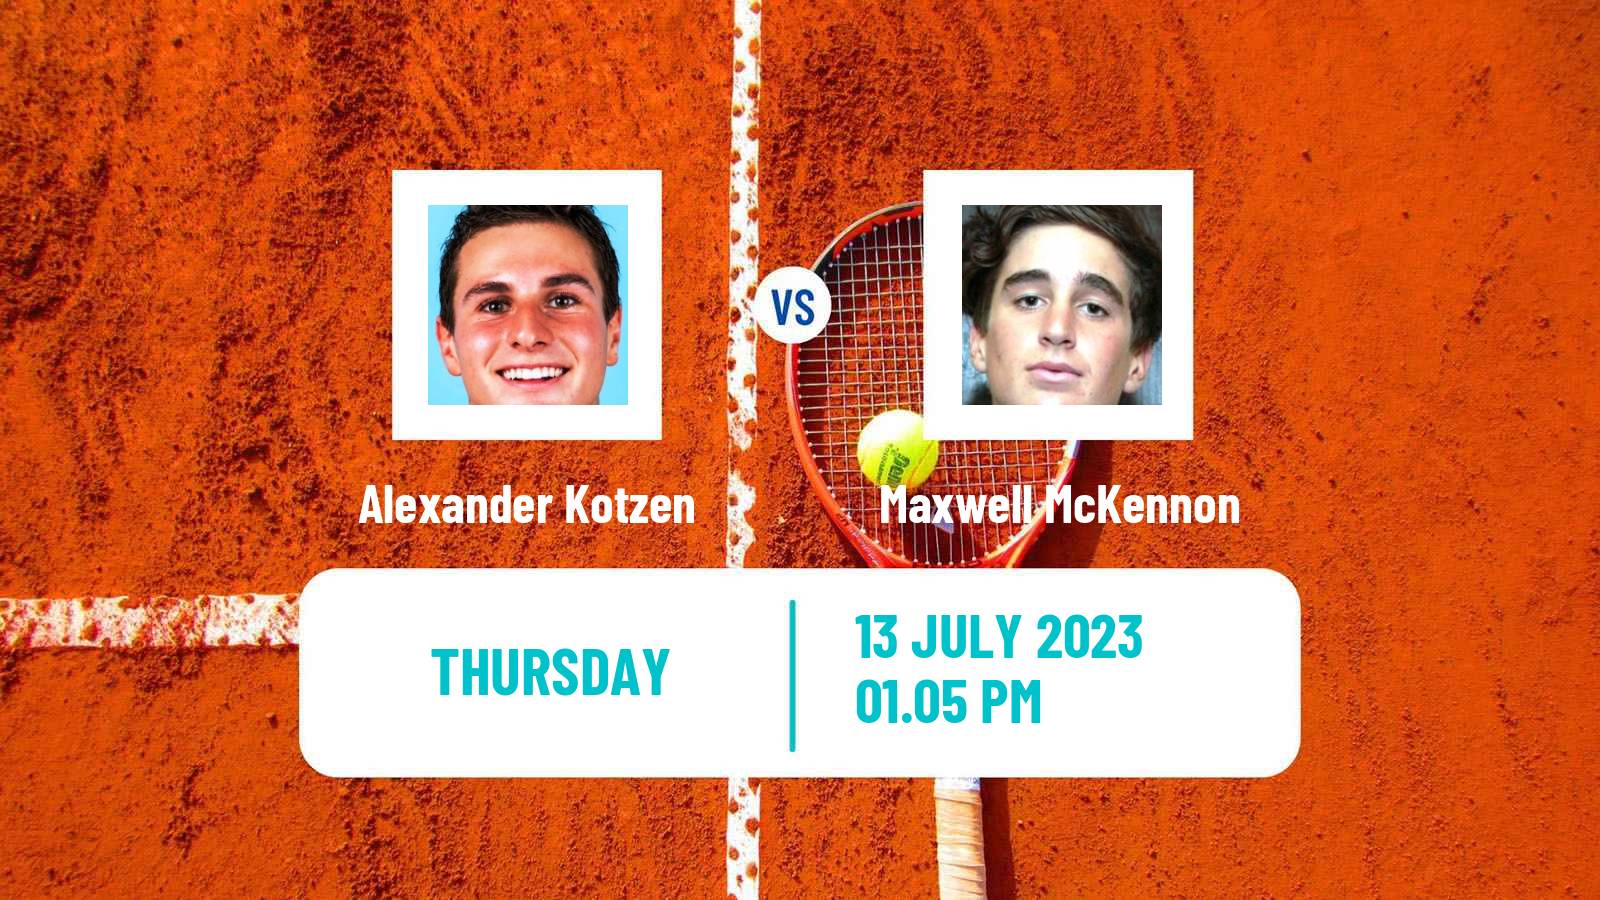 Tennis ITF M15 Lakewood Ca 2 Men Alexander Kotzen - Maxwell McKennon